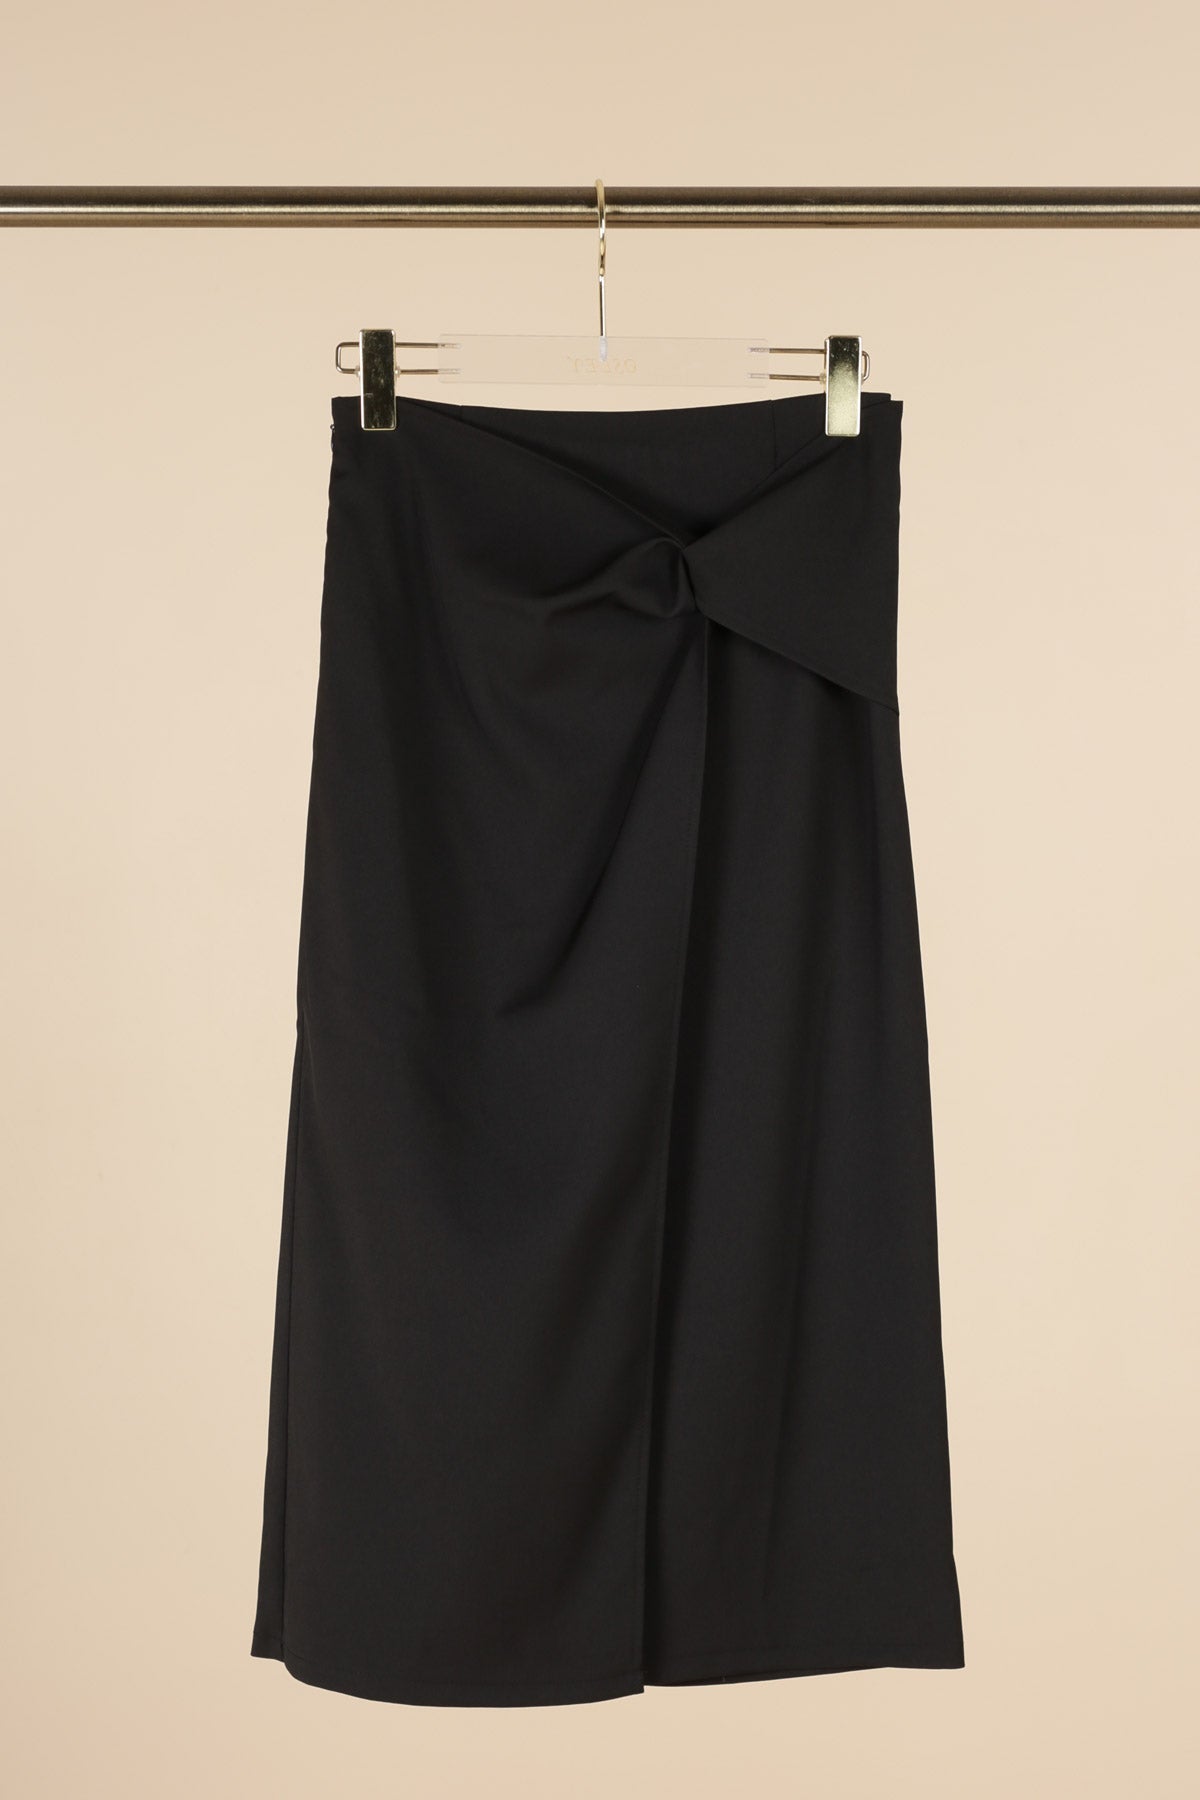 Black Corner Tie Skirt - NIXII Clothing